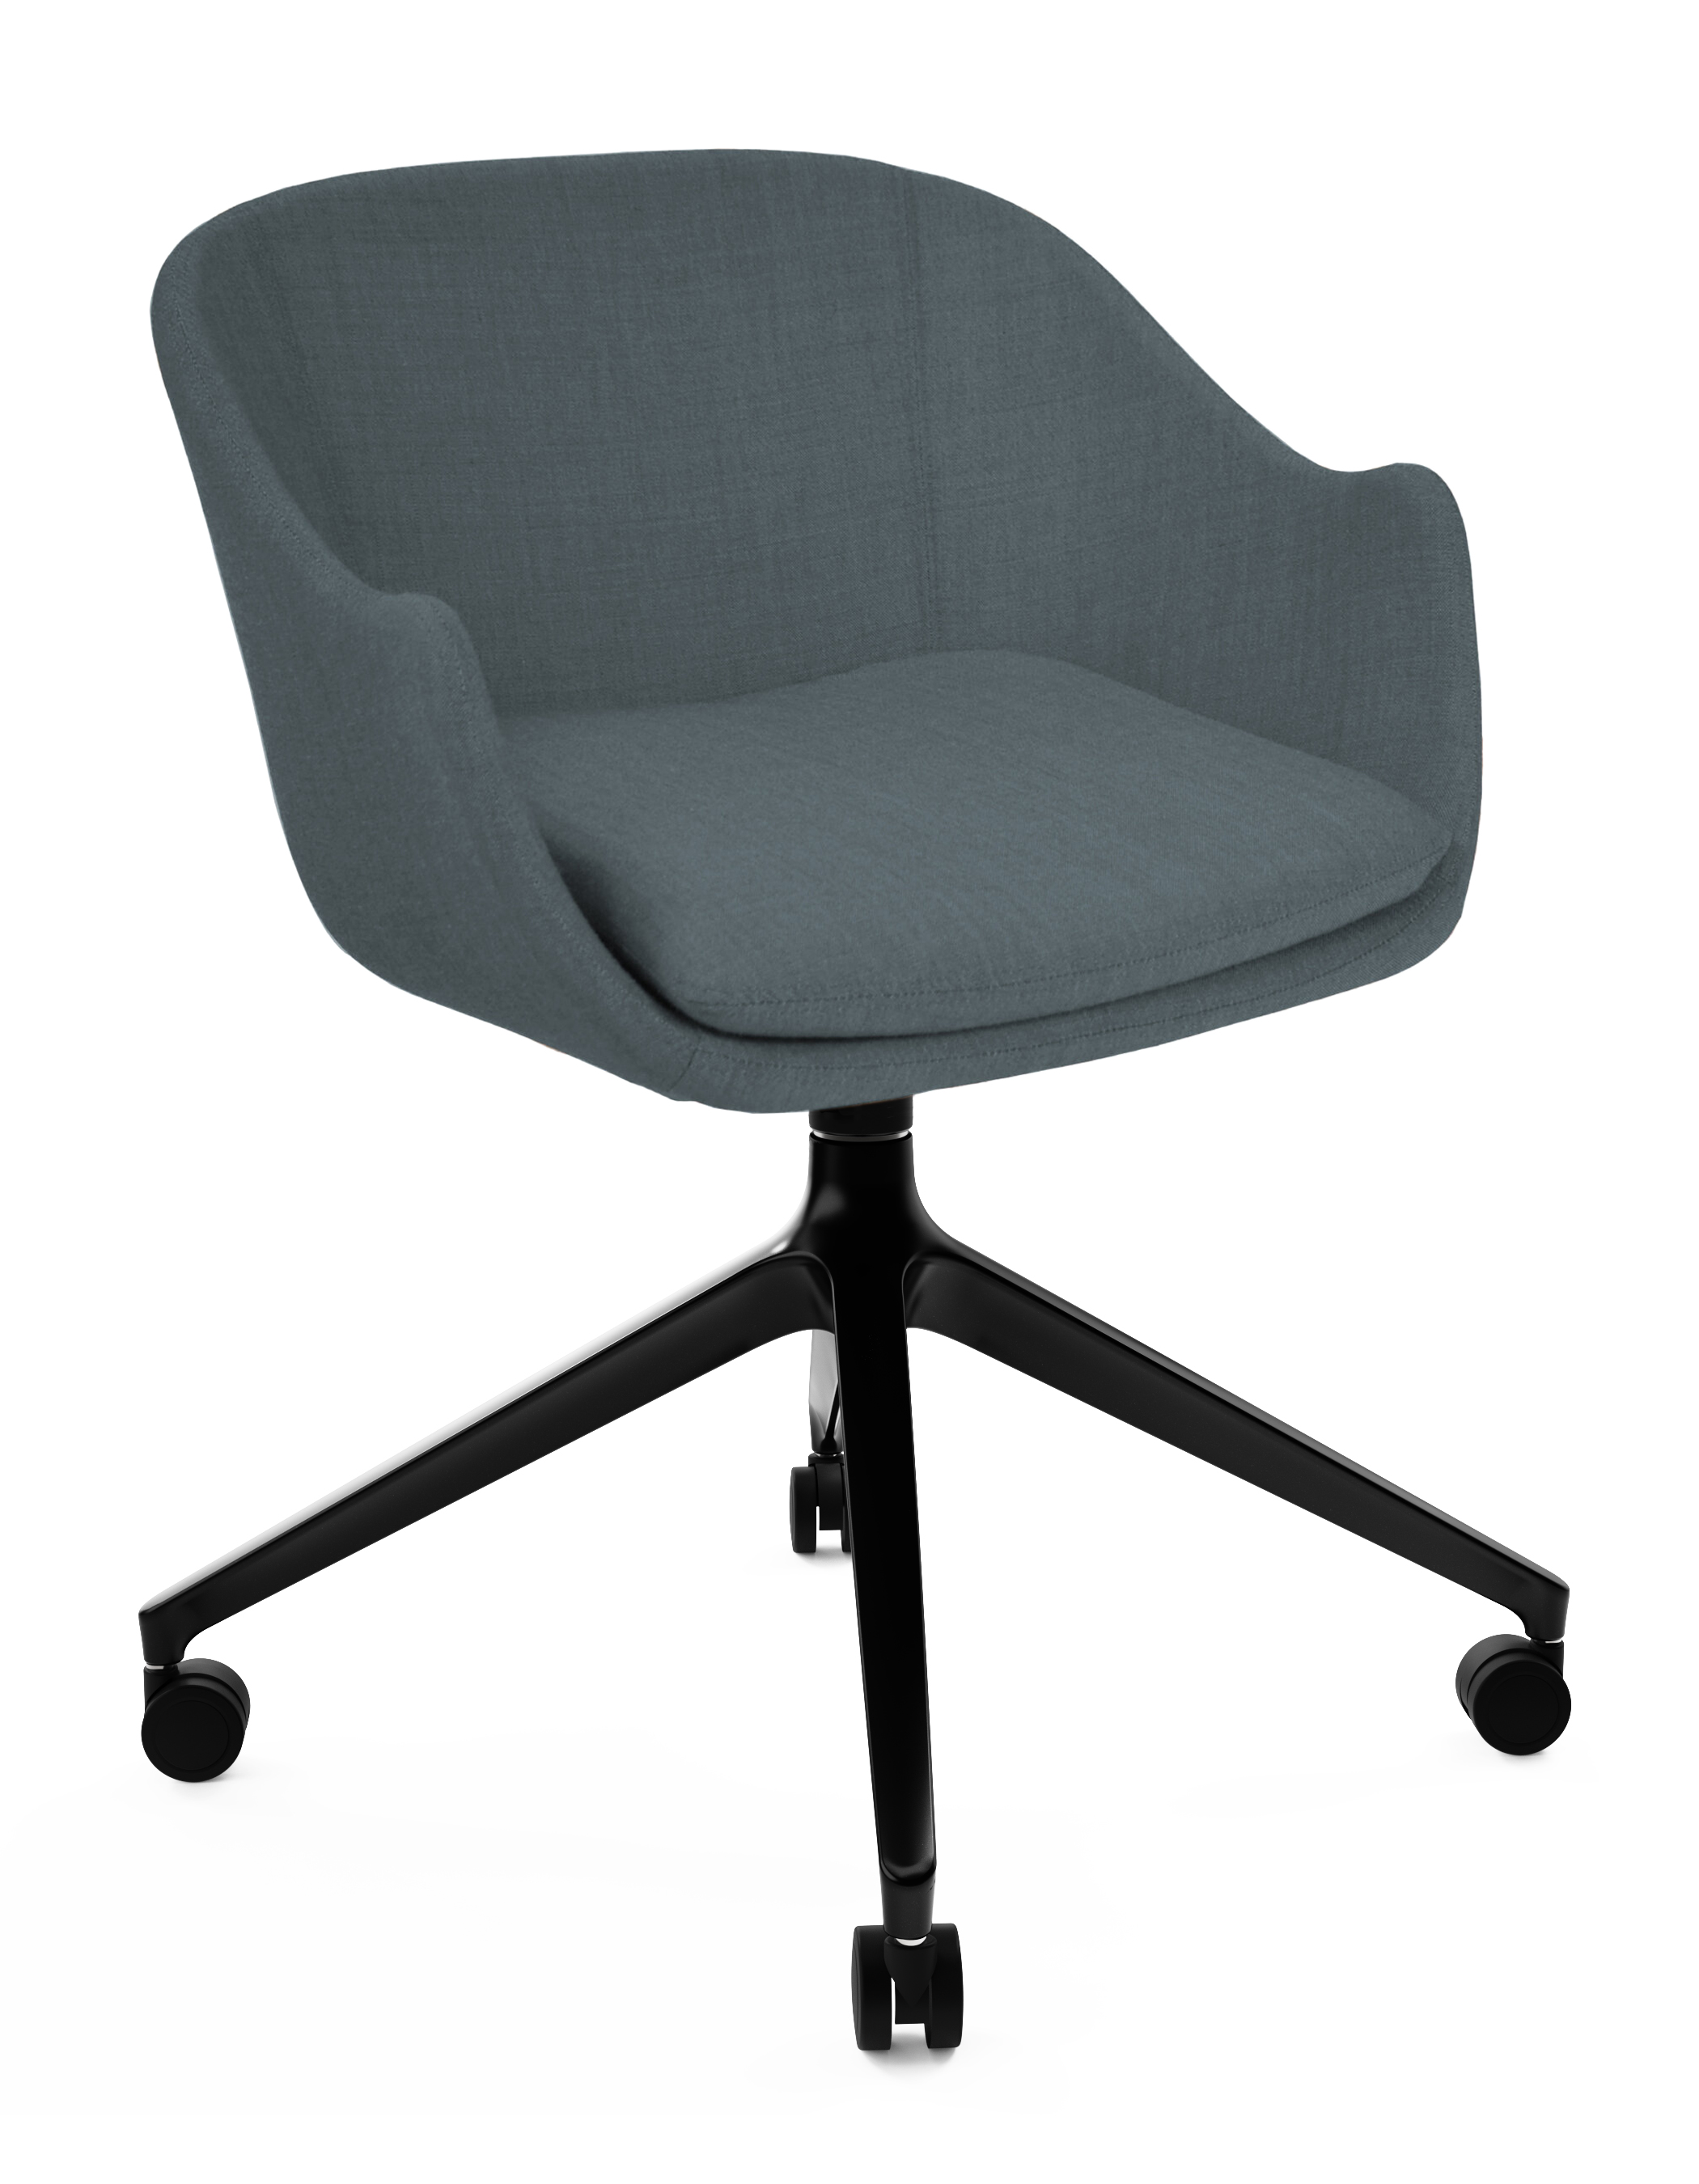 WS - Noir chair - 4 star pyramidal castor black base (Front angle)